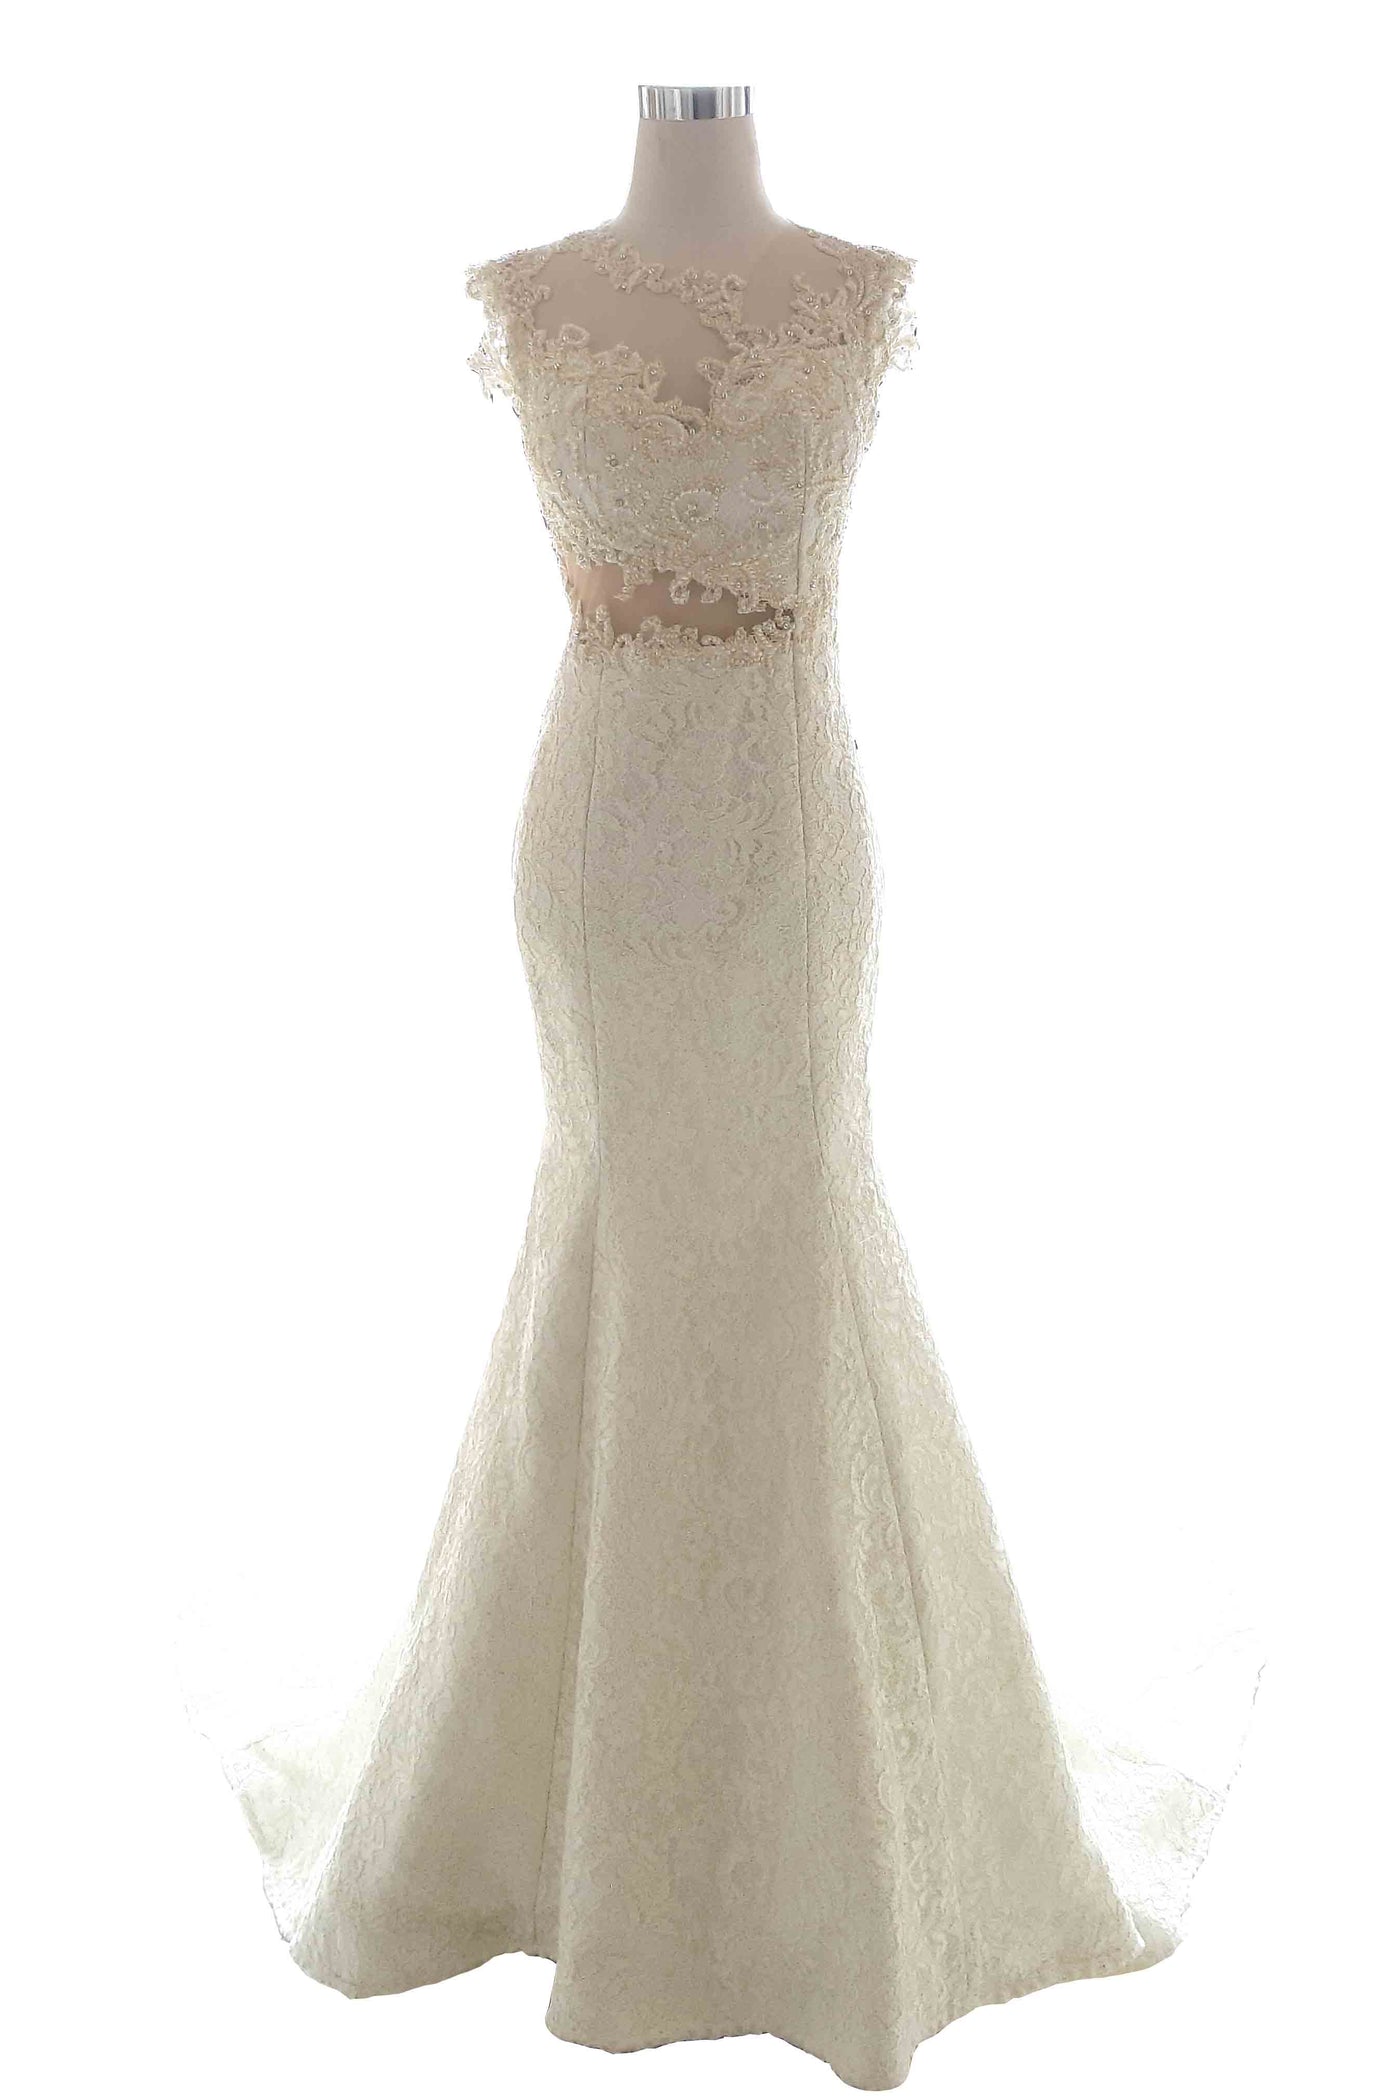 Rent: Ria Andriani - Golden Glittery Mermaid Wedding Gown